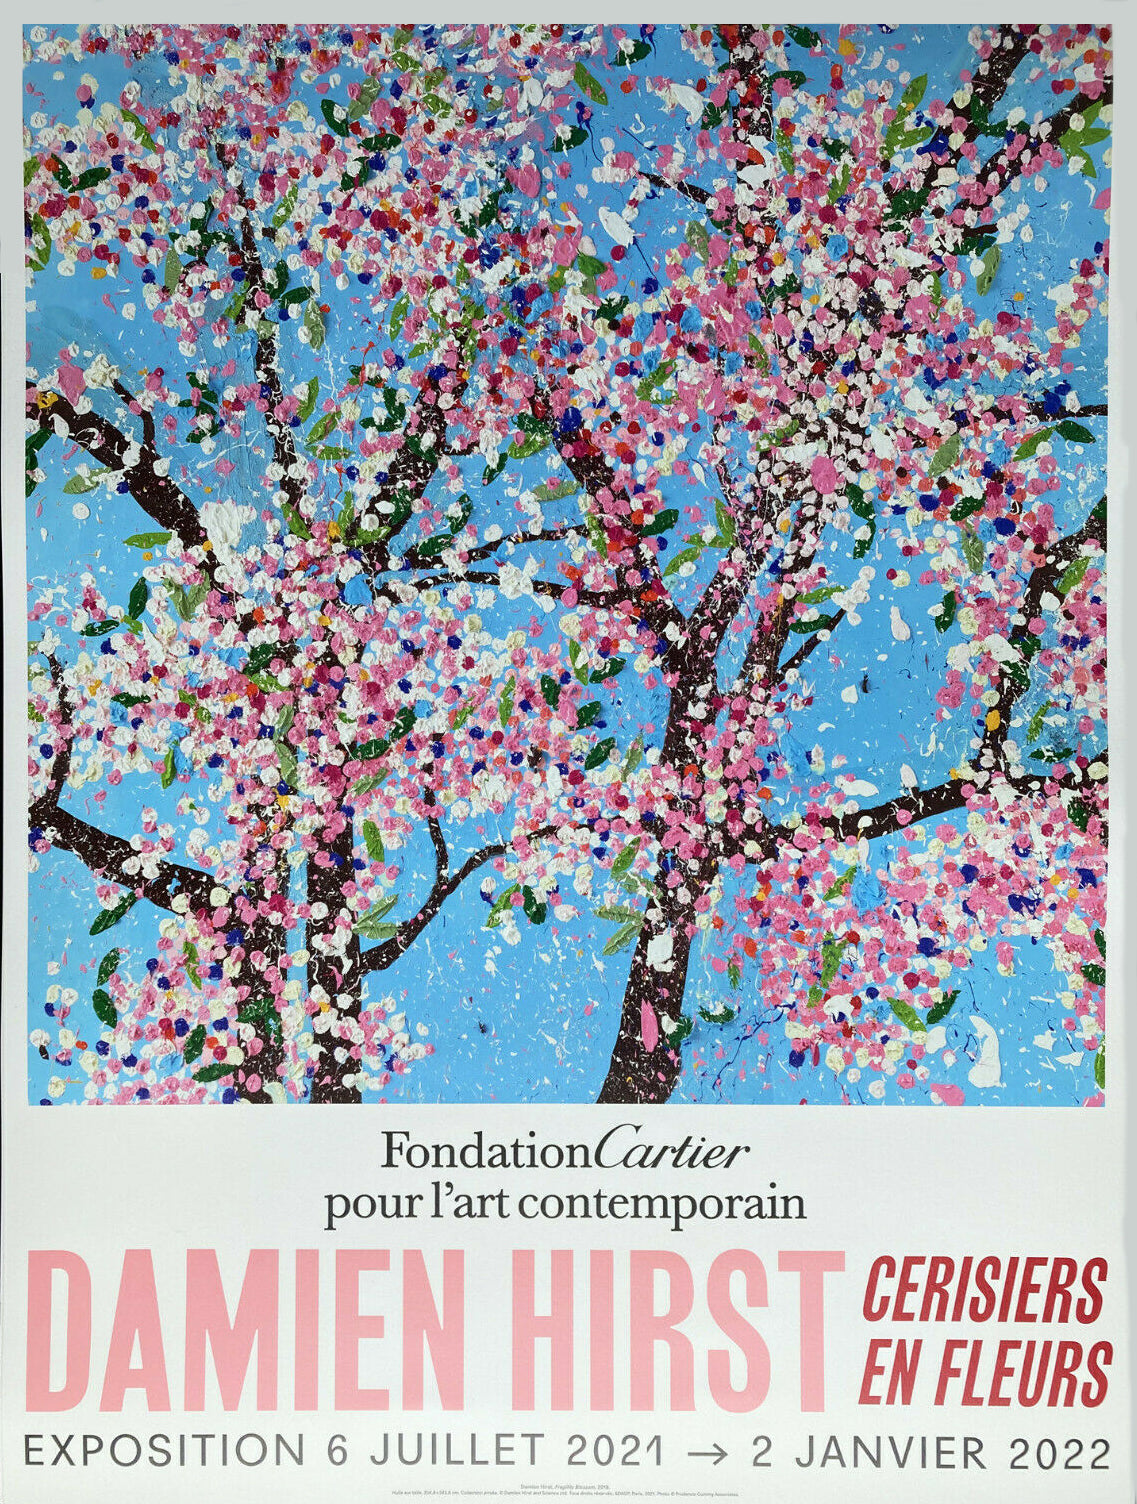 Damien Hirst - Cherry Blossom - Fondation Cartier Paris ©, Original exhibition poster 2/6